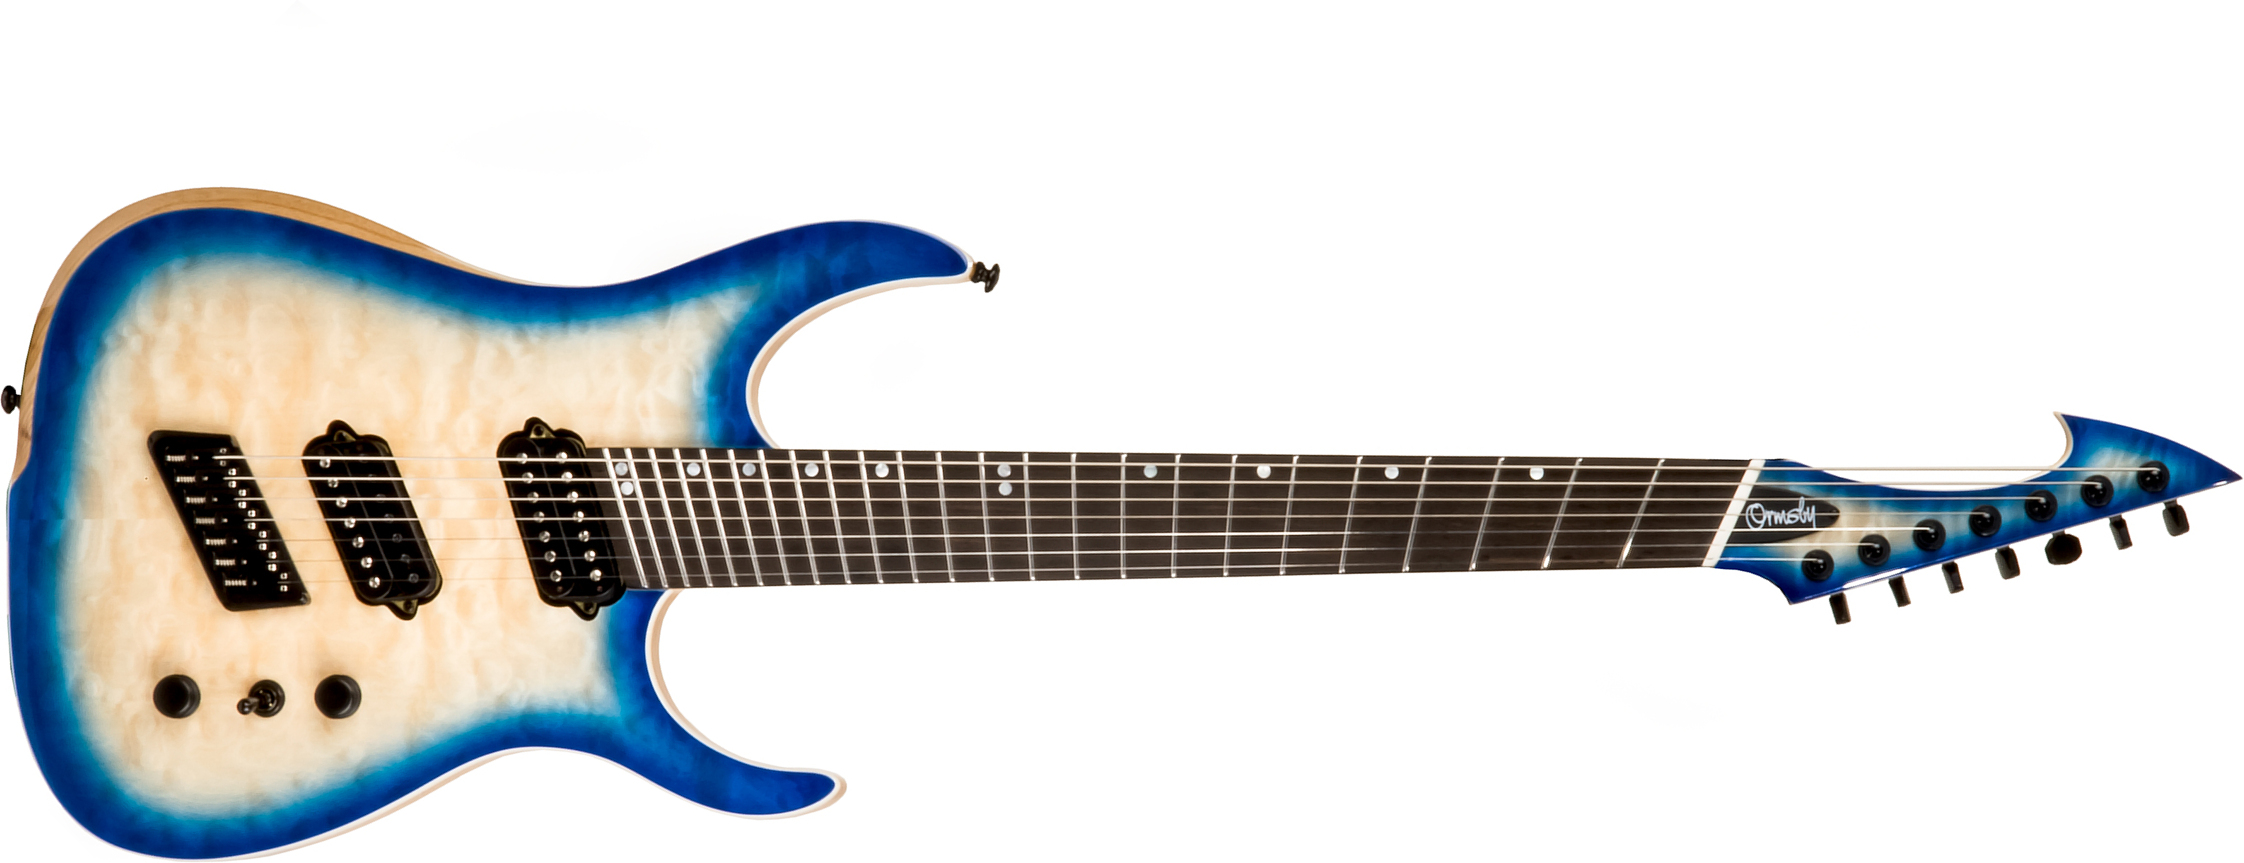 Ormsby Tx Gtr 7 Swamp Ash Quilt Maple Hh Ht Eb - Azzurro Blue - Multi-Scale Guitar - Main picture